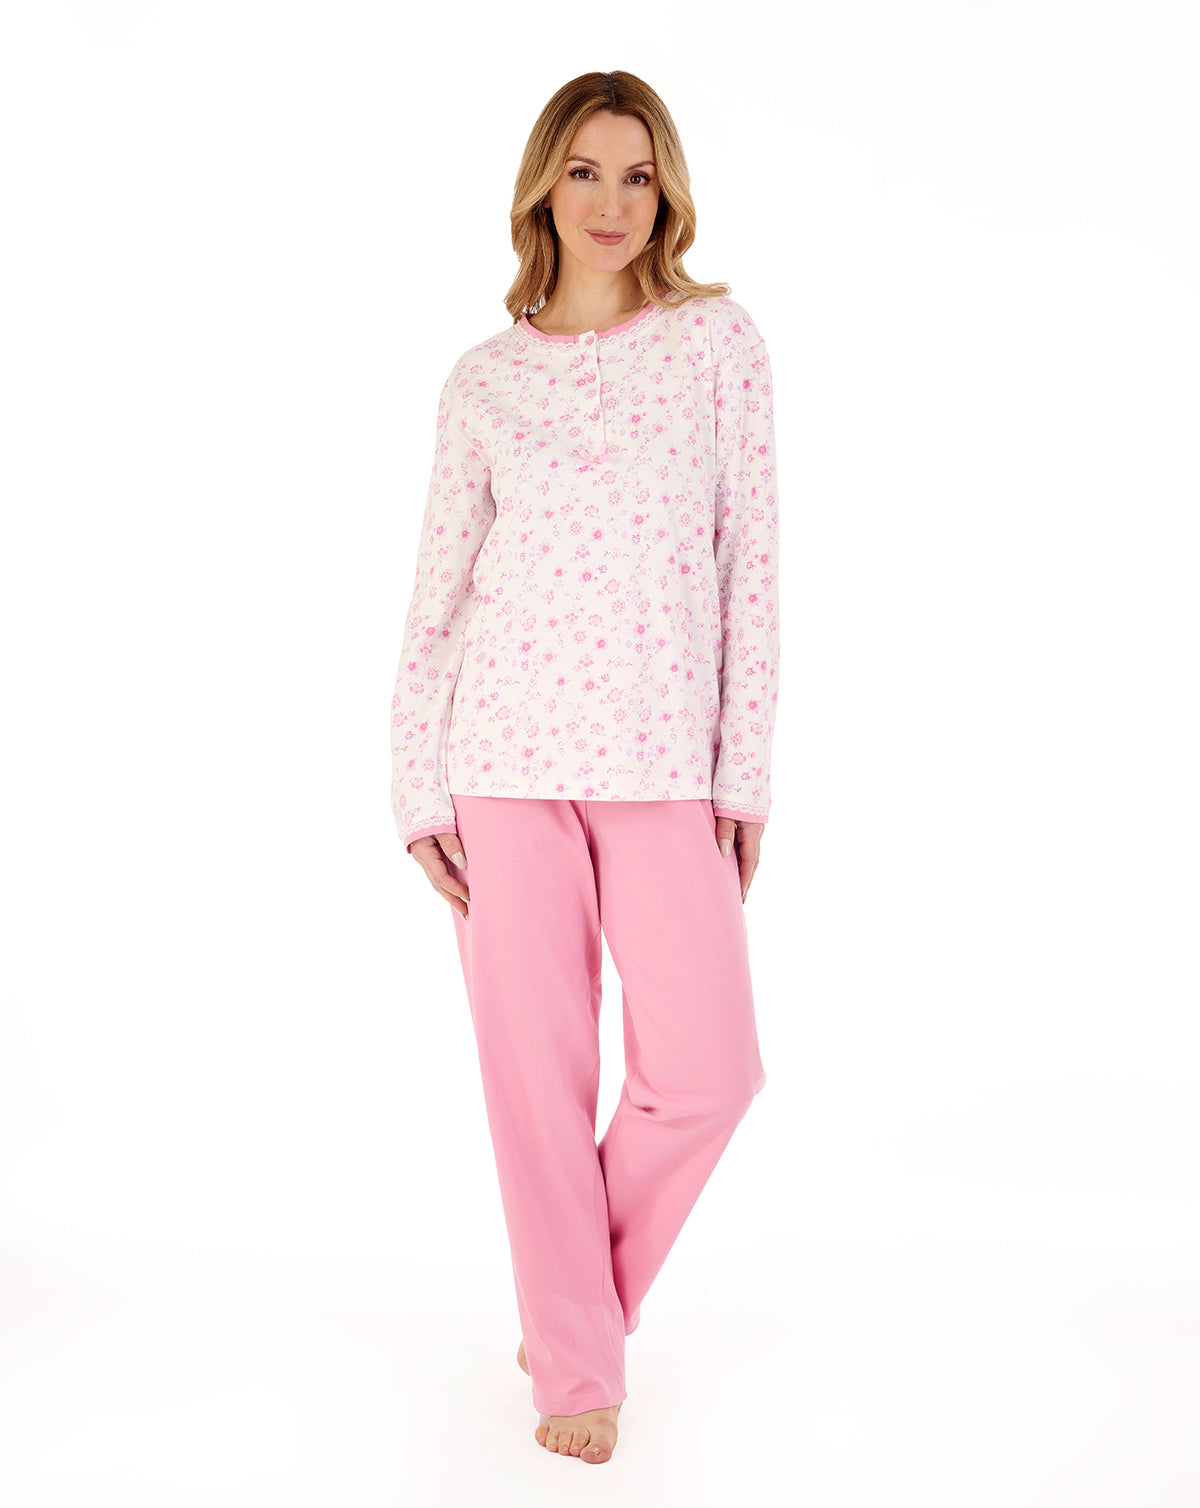 Slenderella Ladies Long Sleeved 100% Cotton Pyjamas